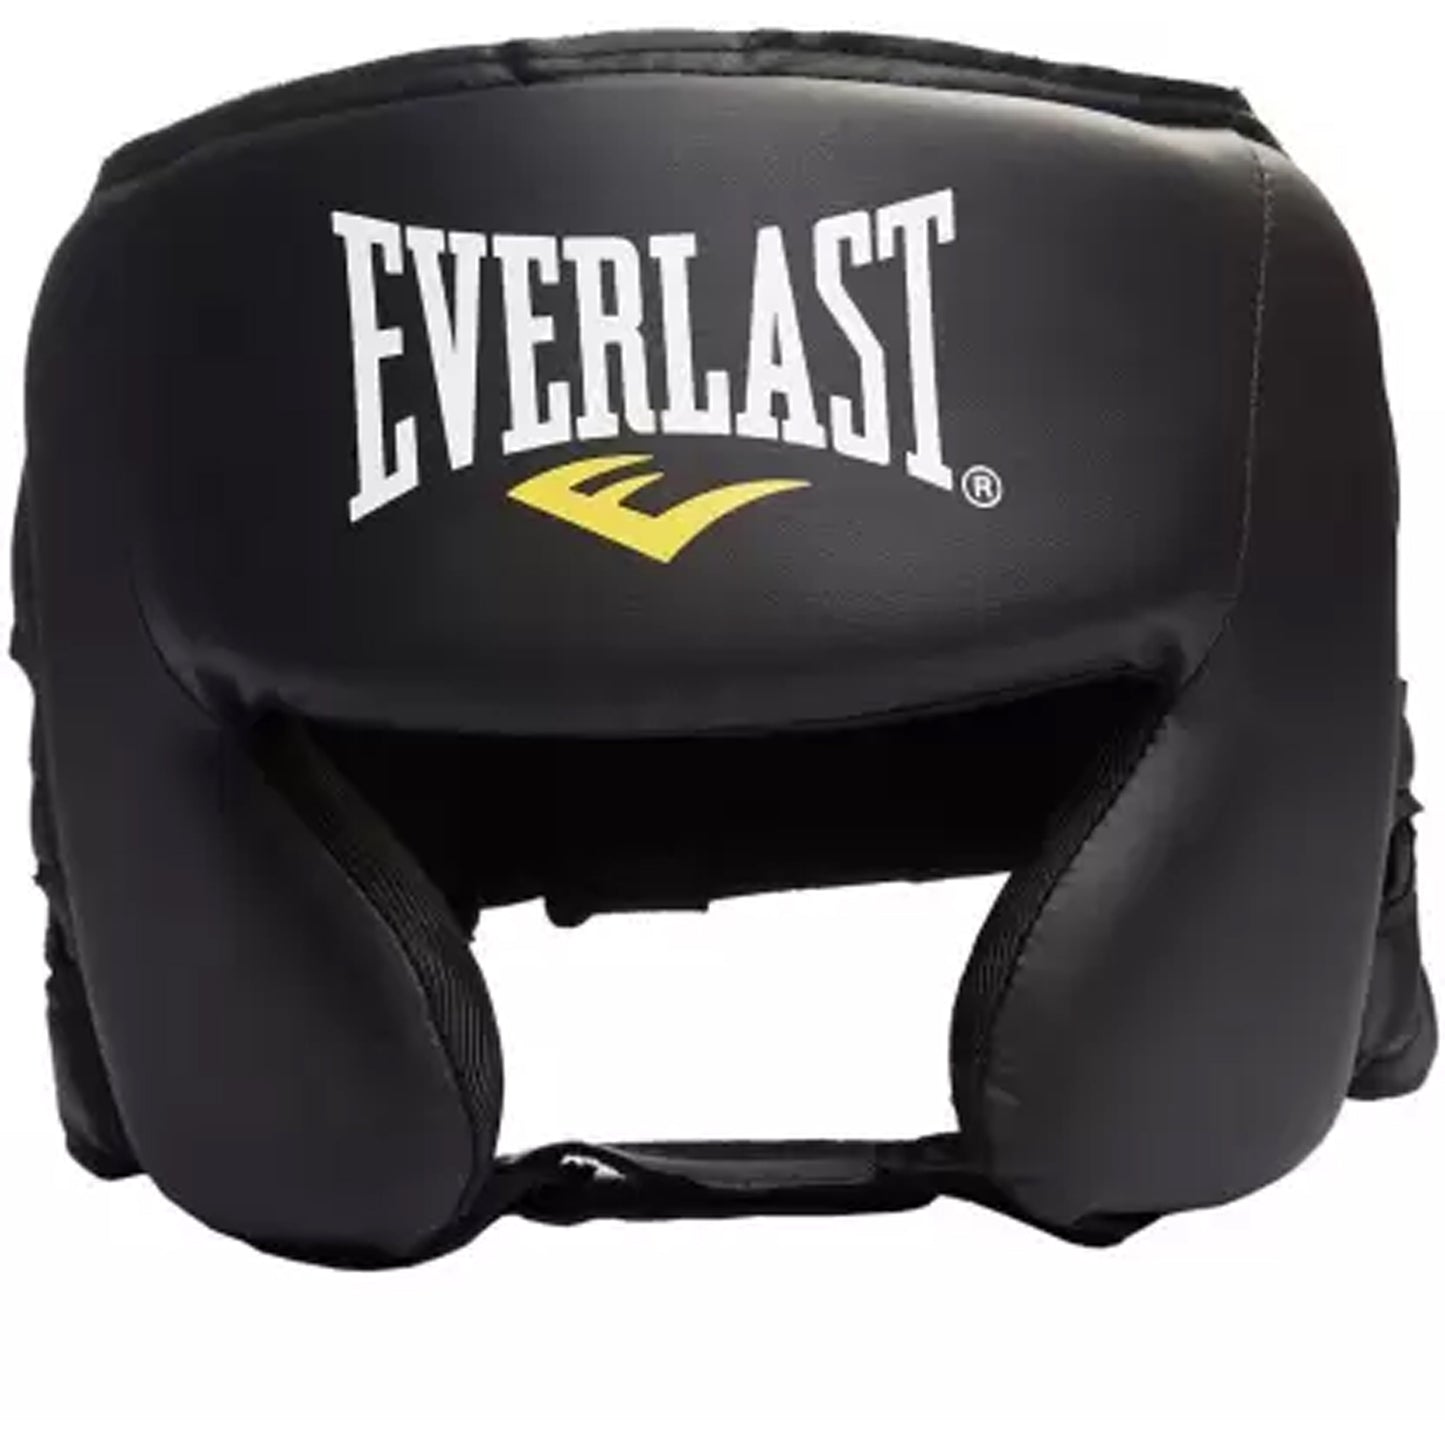 Everlast Boxing Everfresh Headguard 40, Black - Best Price online Prokicksports.com